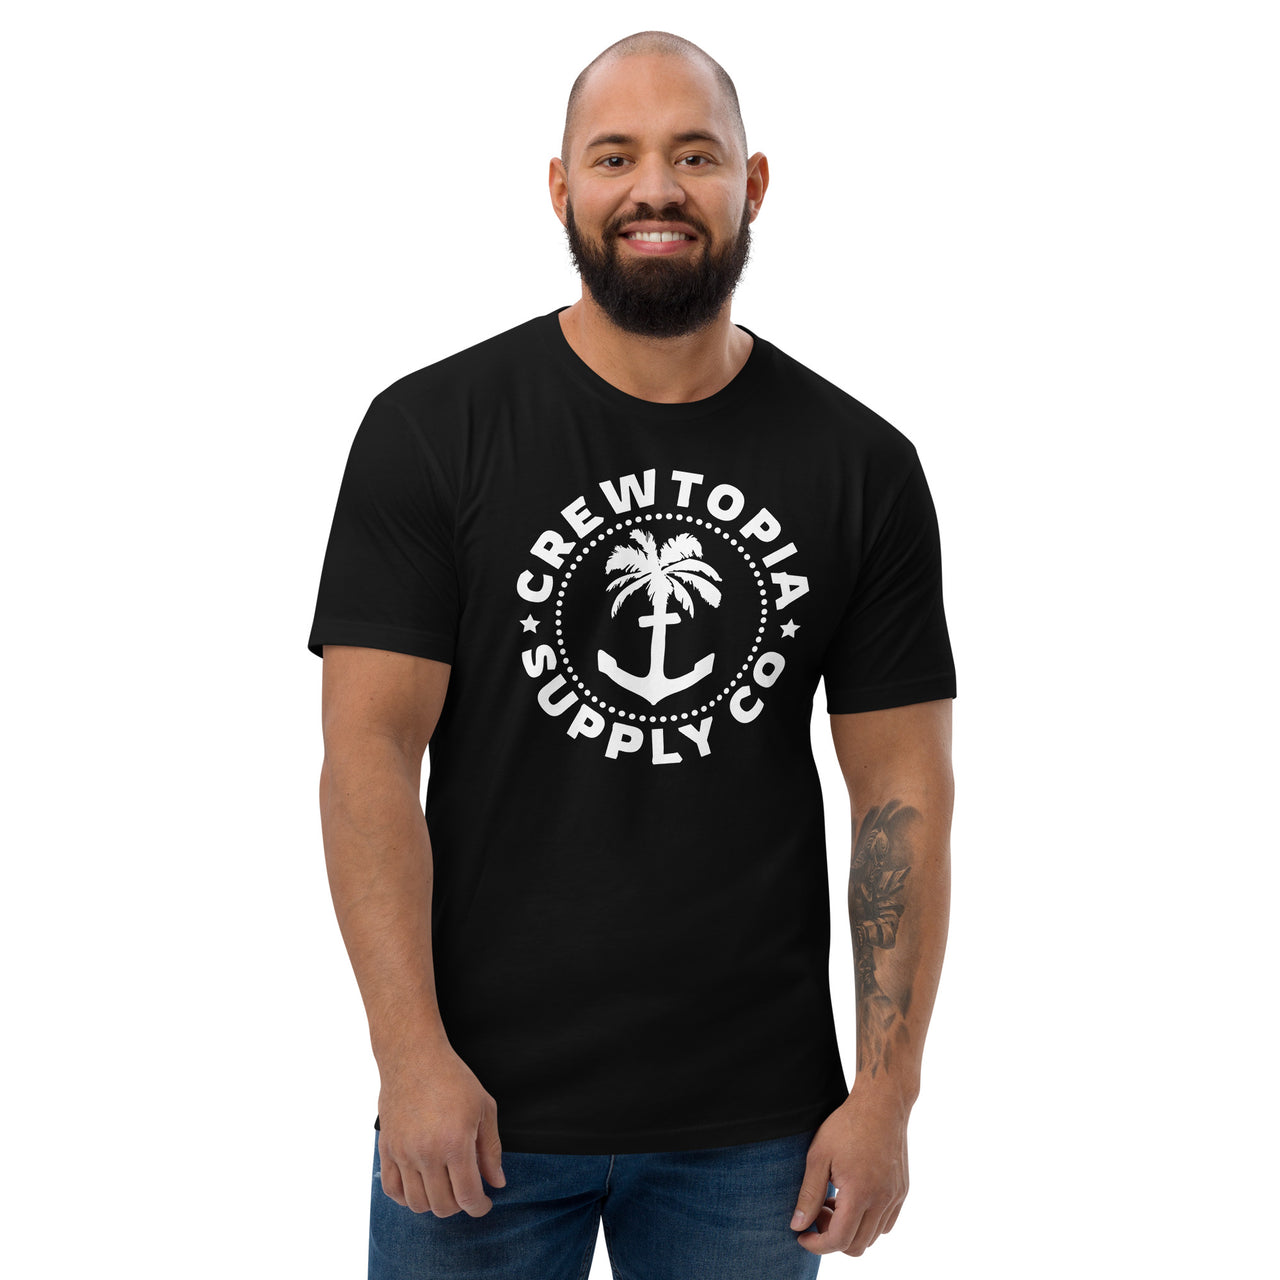 Crewtopia Supply Co.- Short Sleeve T-shirt